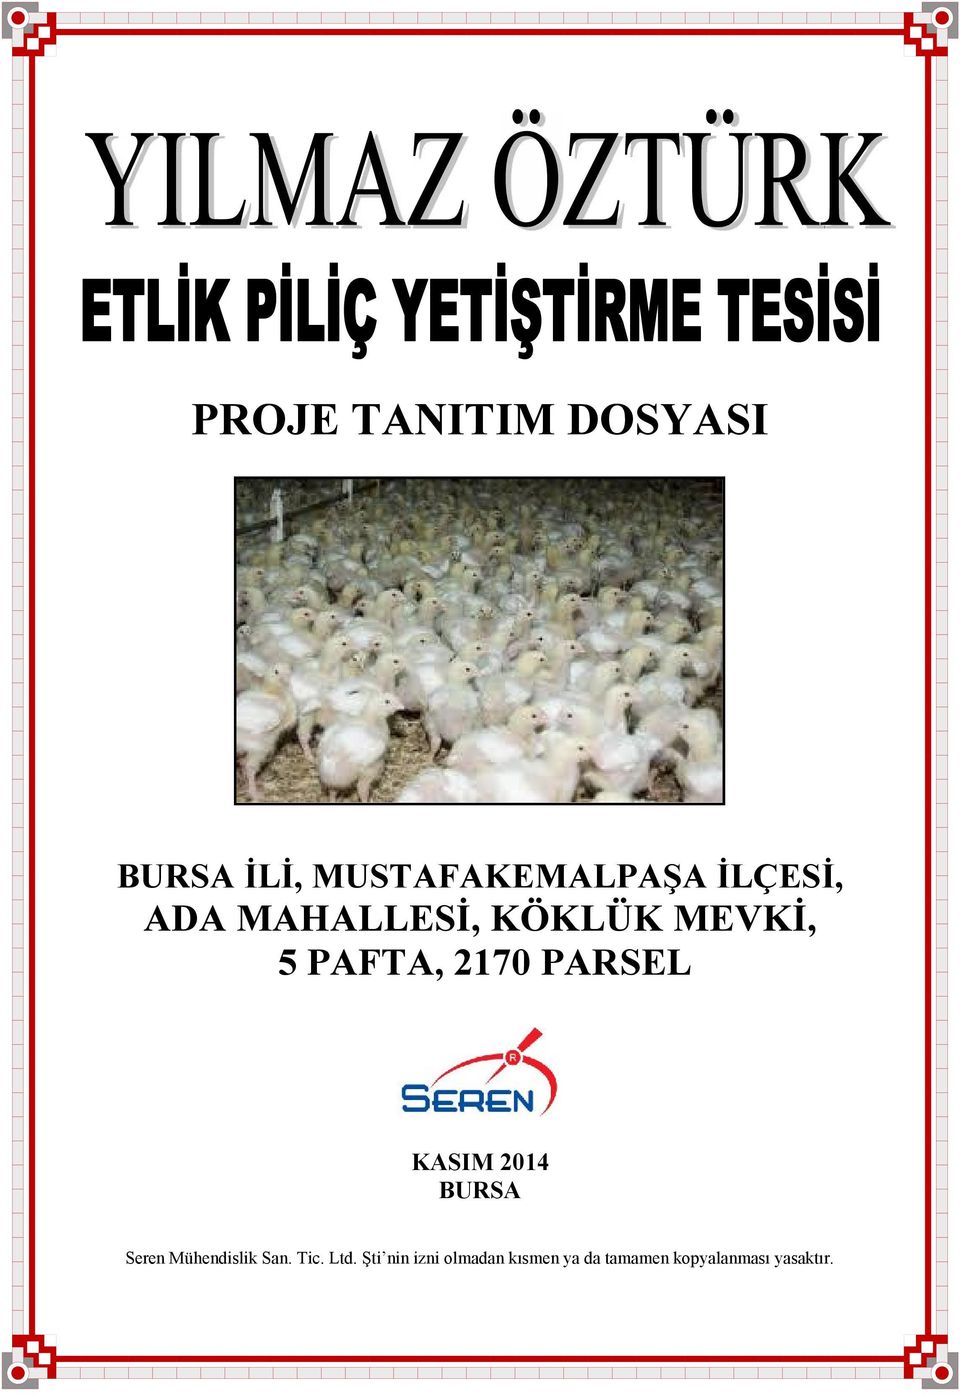 PARSEL KASIM 2014 BURSA Seren Mühendislik San. Tic. Ltd.